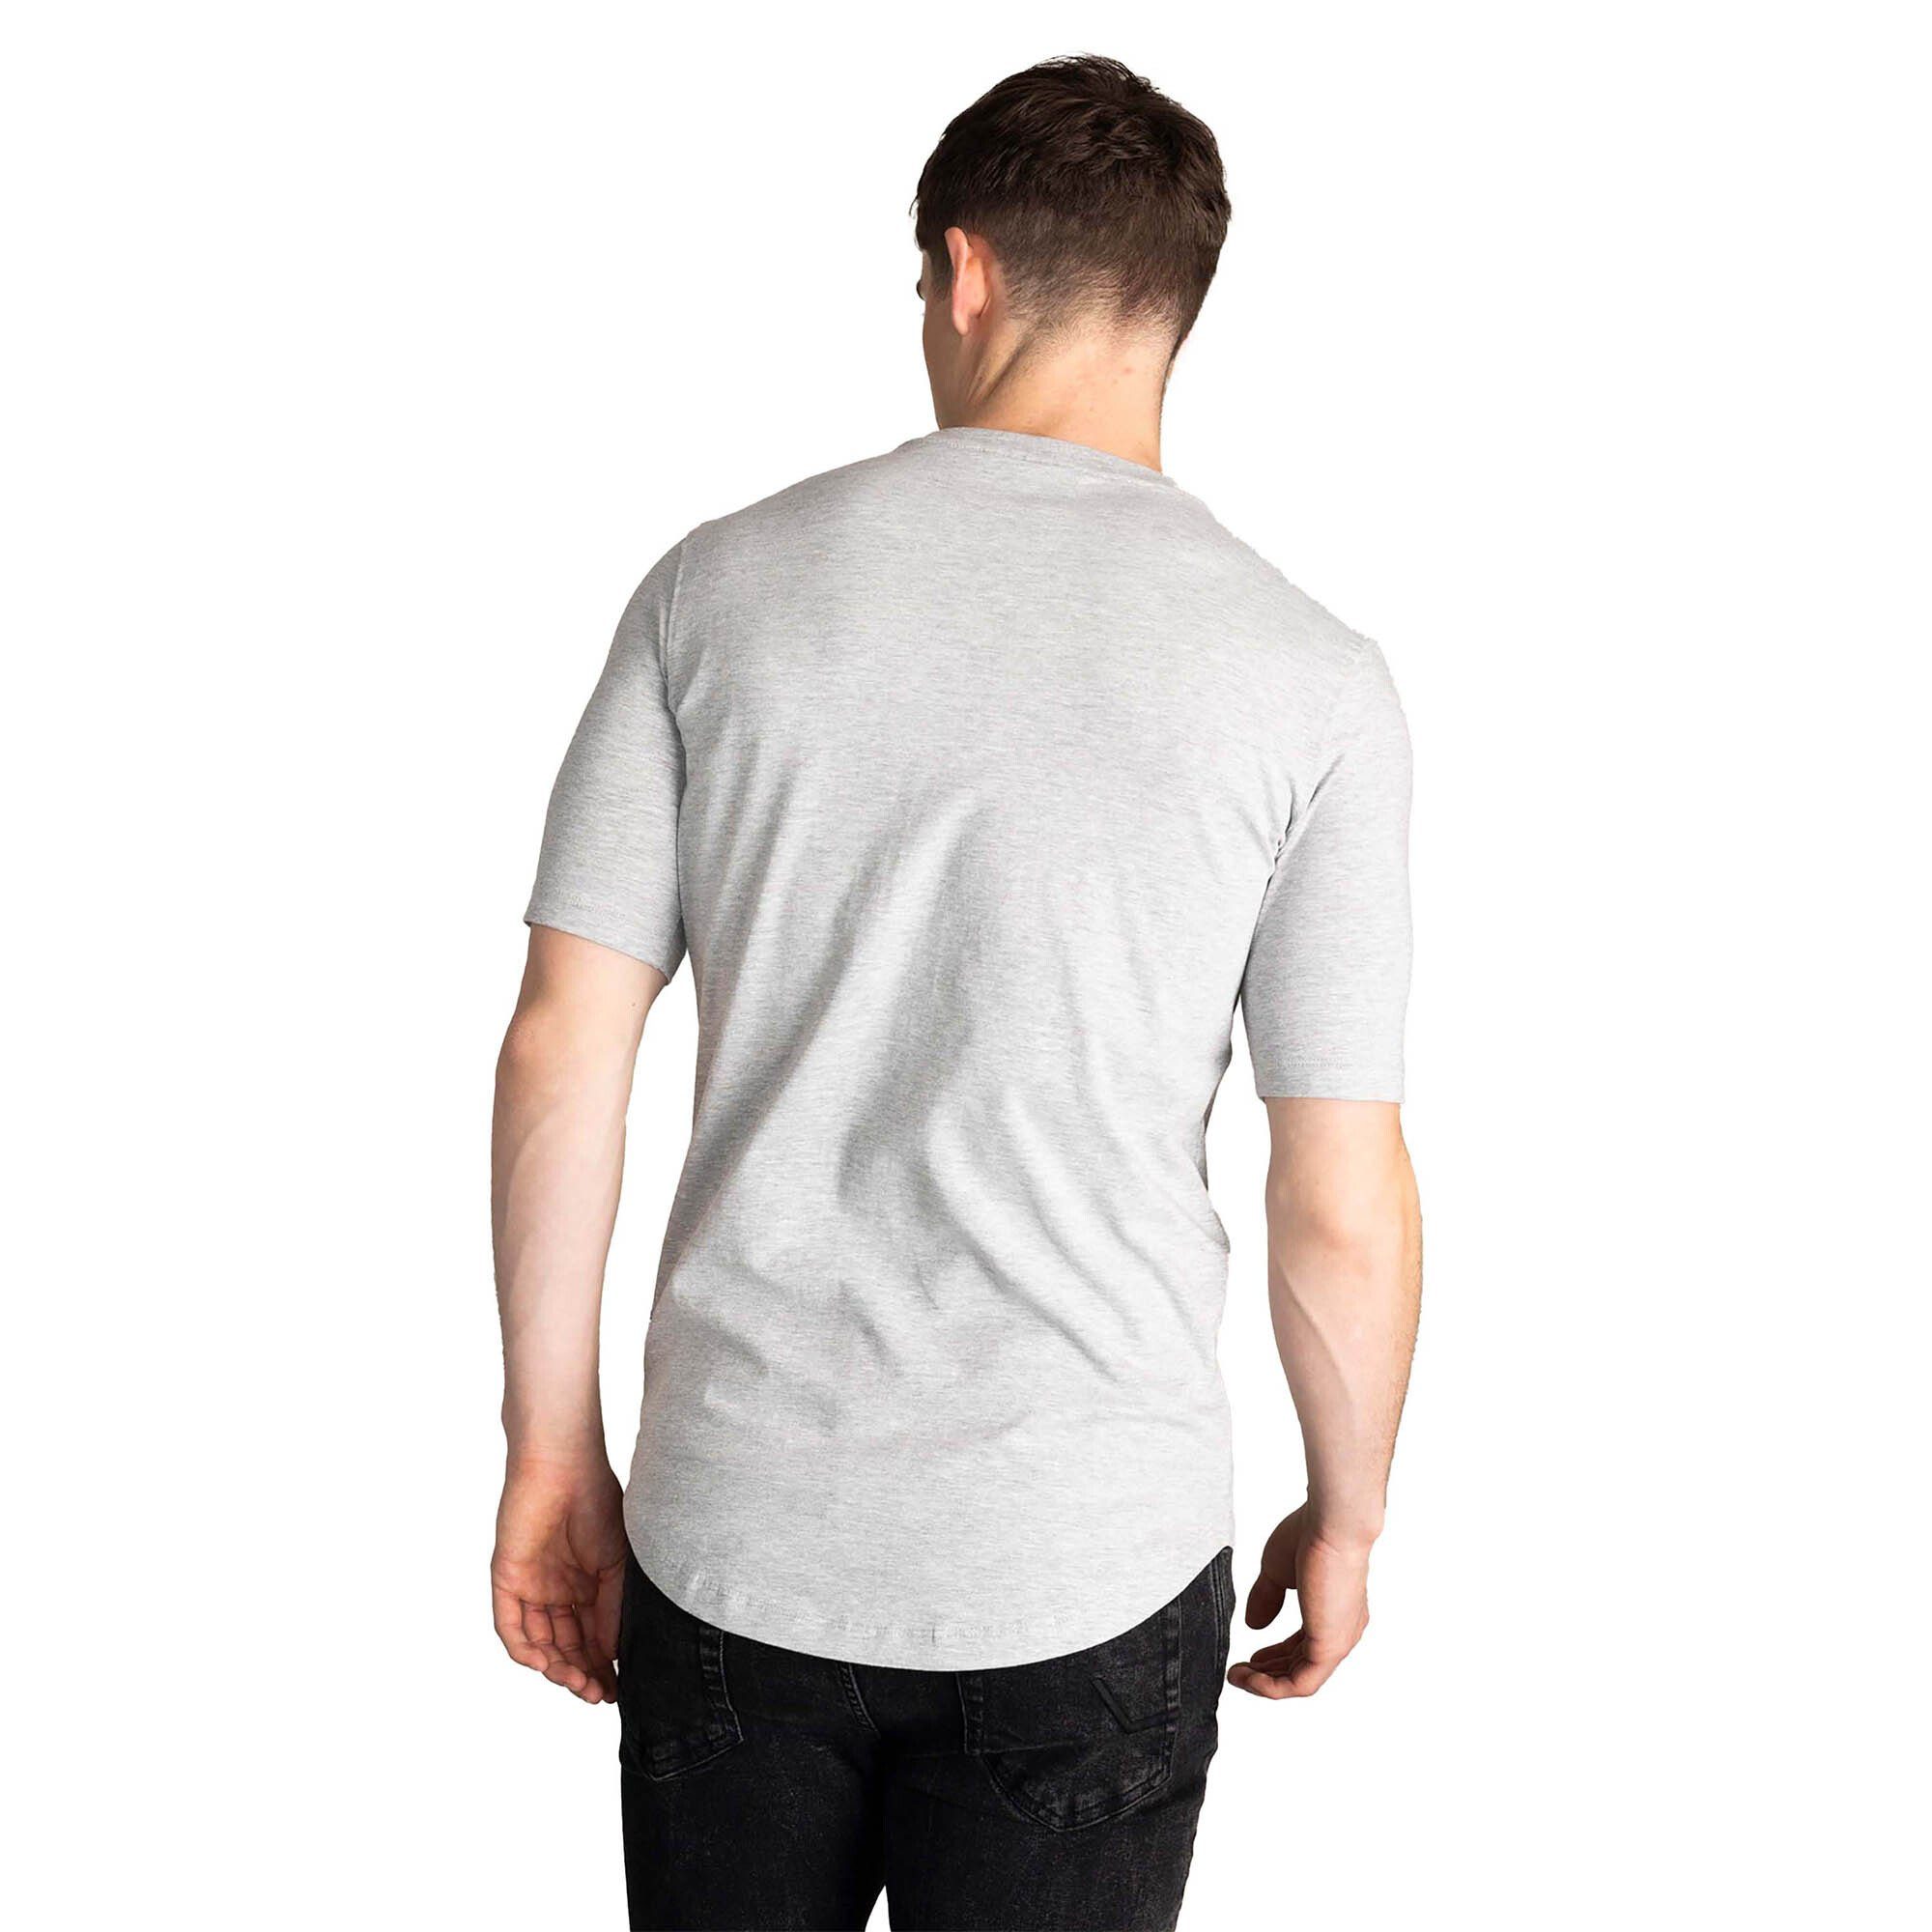 T-Shirt Branded BALR. Grau Small Chest - Athletic Herren T-Shirt